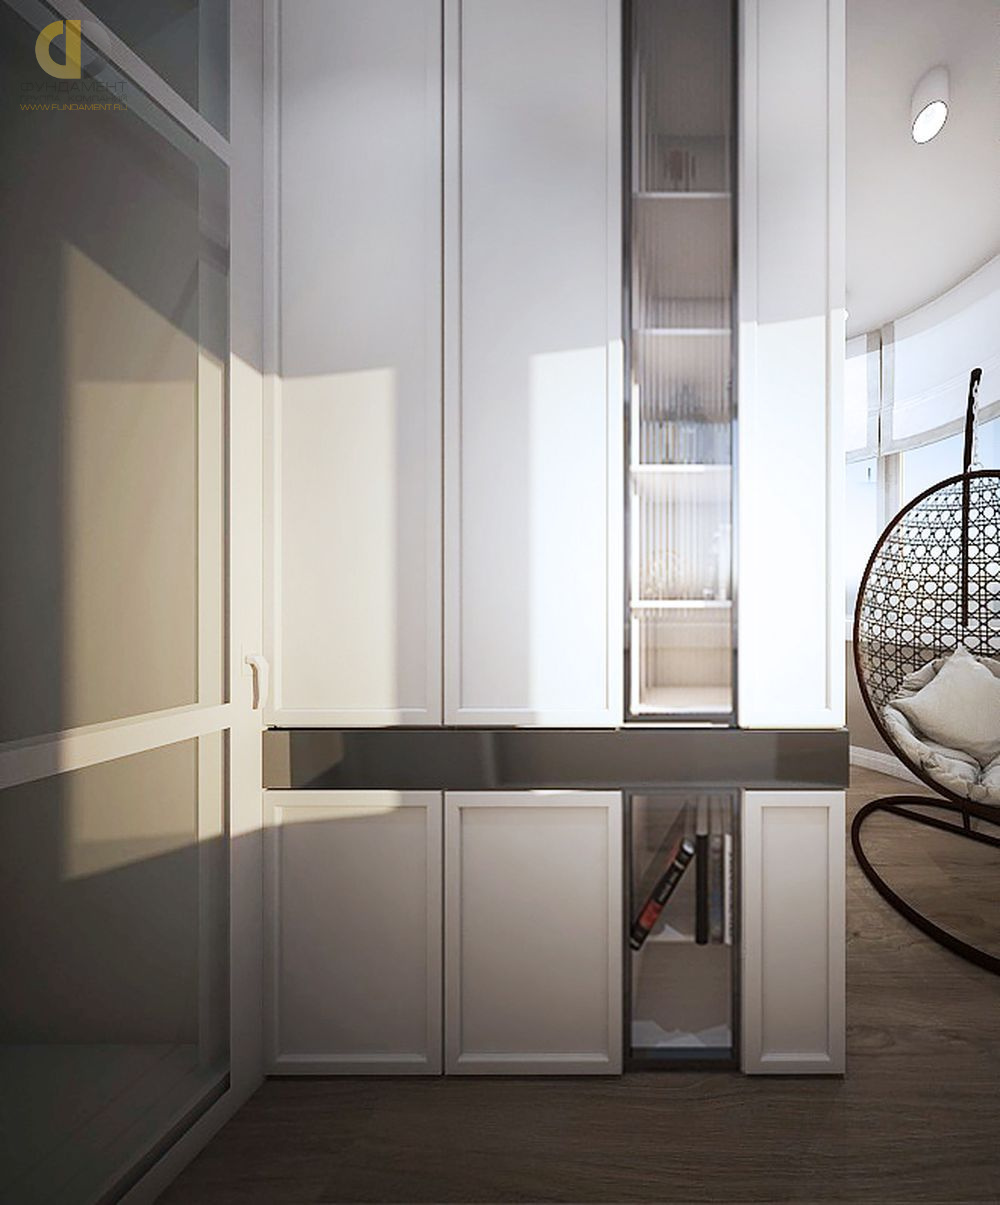 Дизайн интерьера балкона четырёхкомнатной квартире 142 кв. м в стиле неоклассика  – фото 120